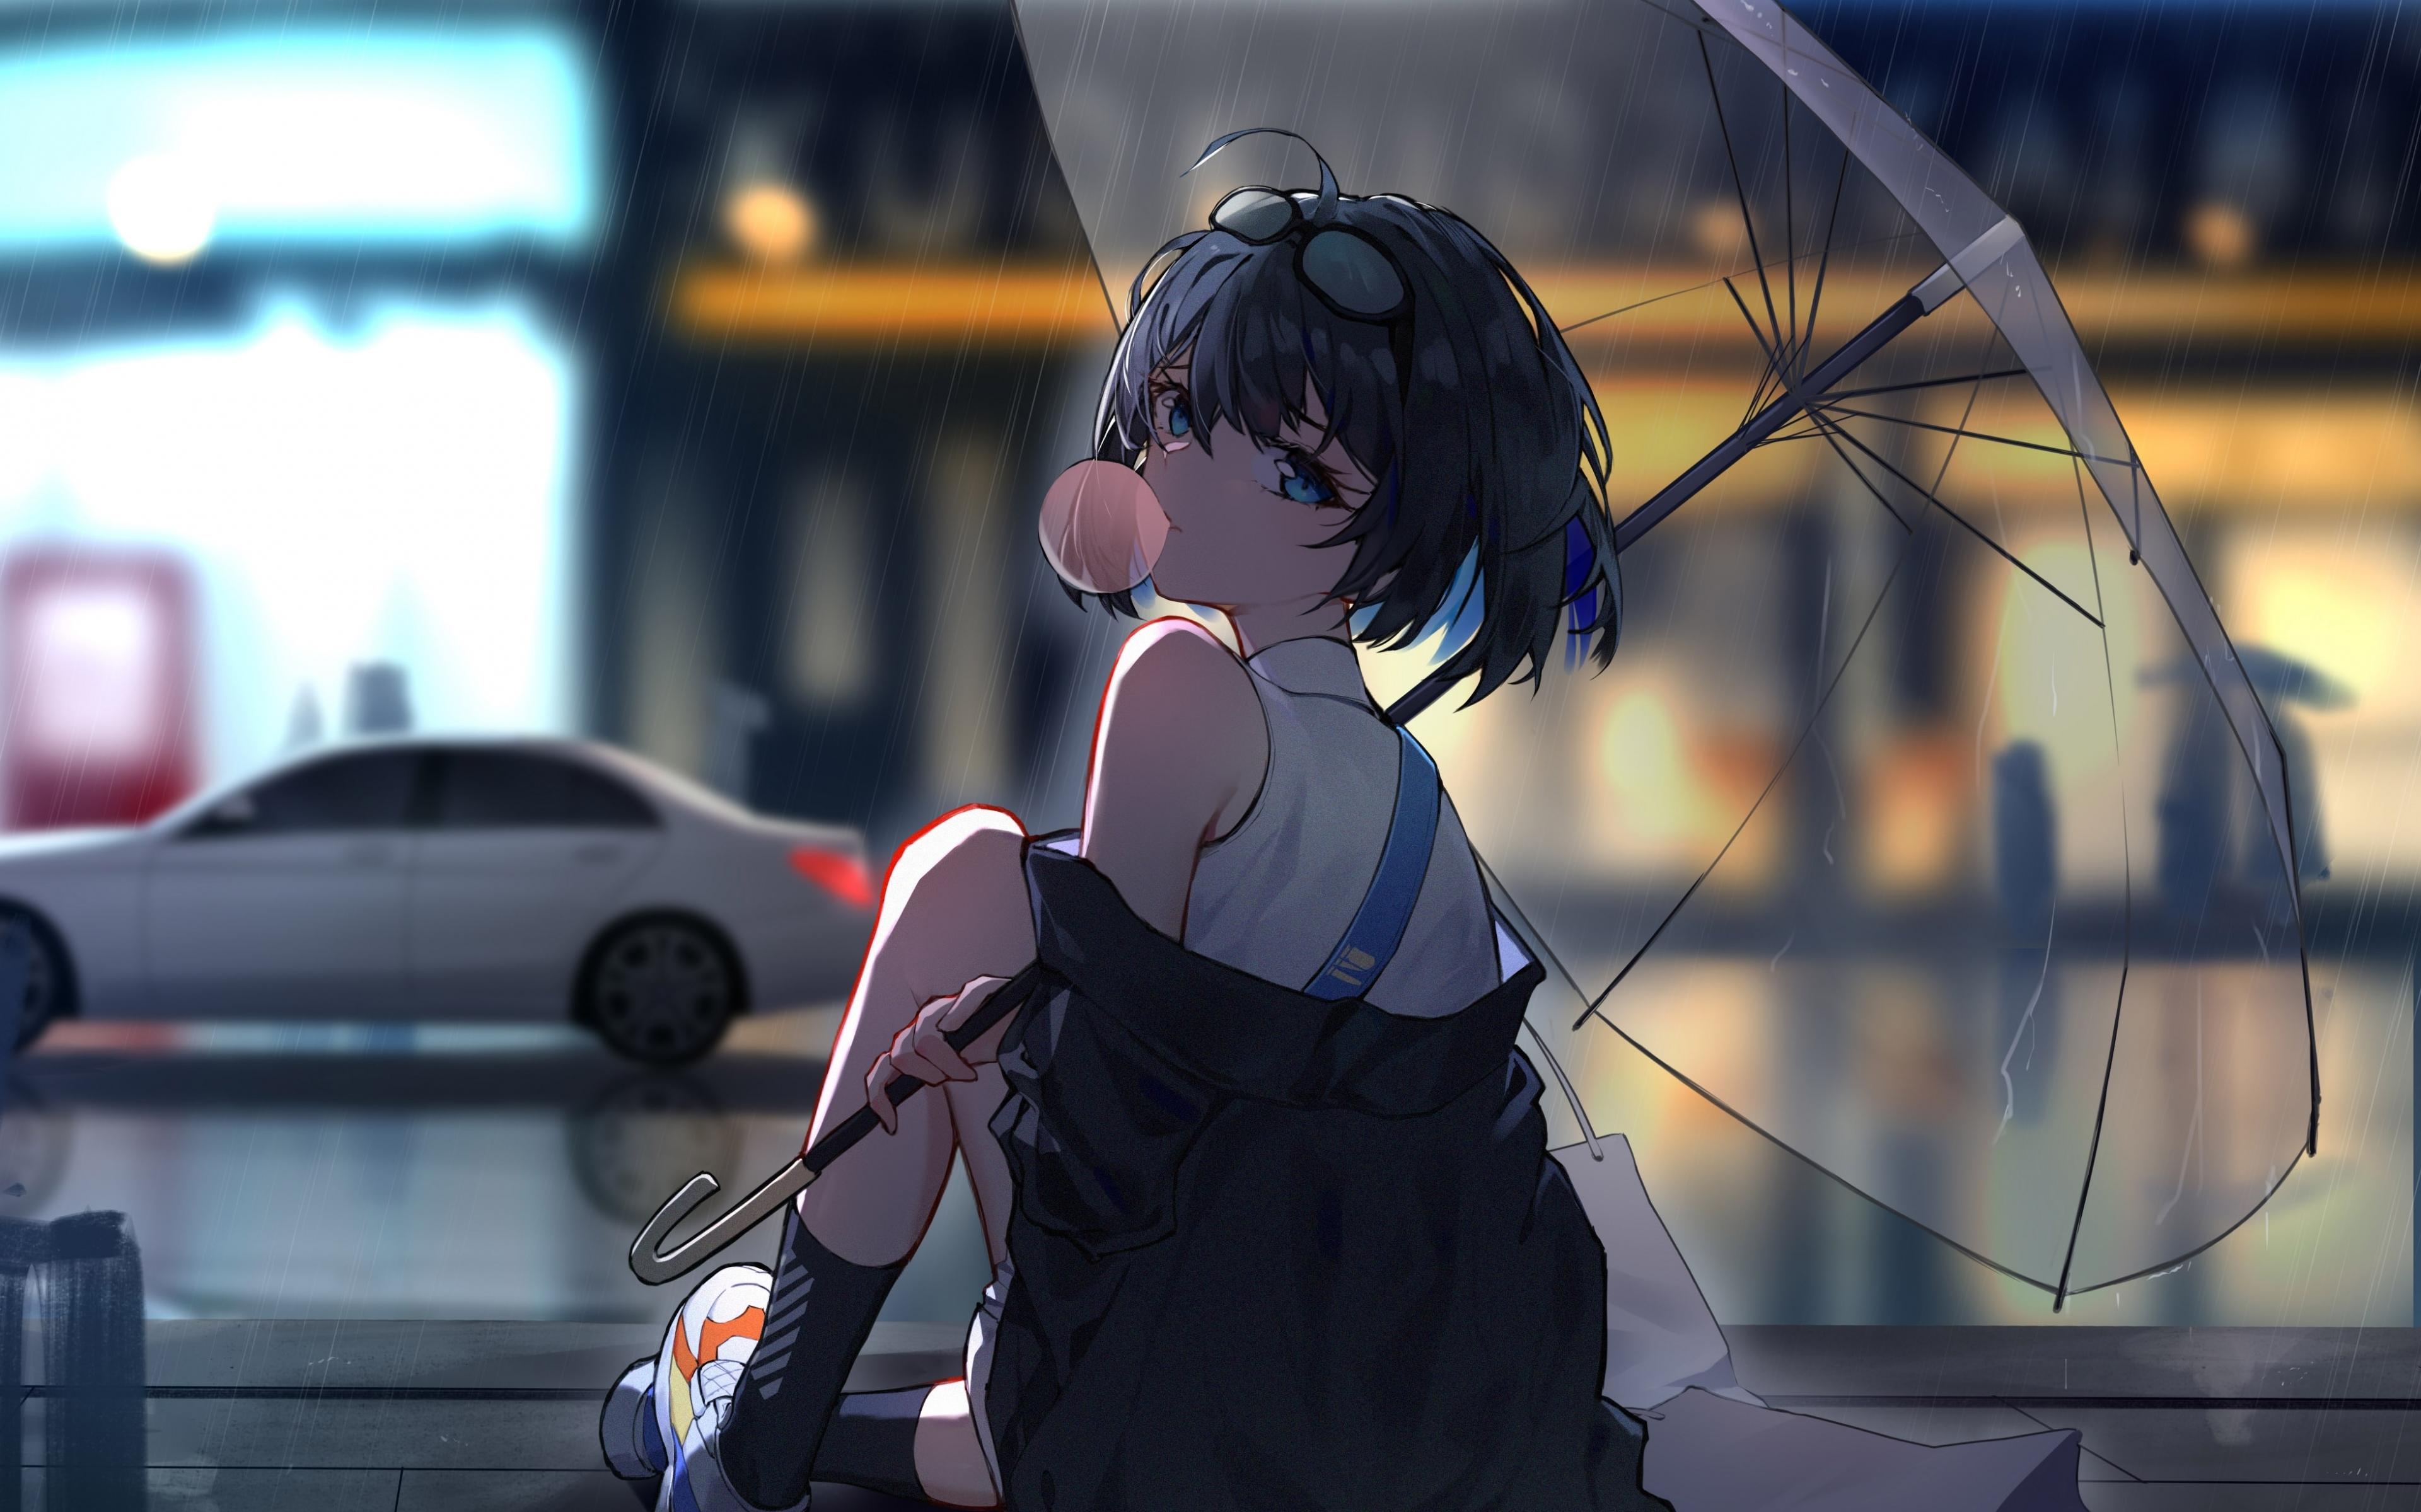 Download wallpaper 3840x2400 enjoying rain anime girl 4k wallaper